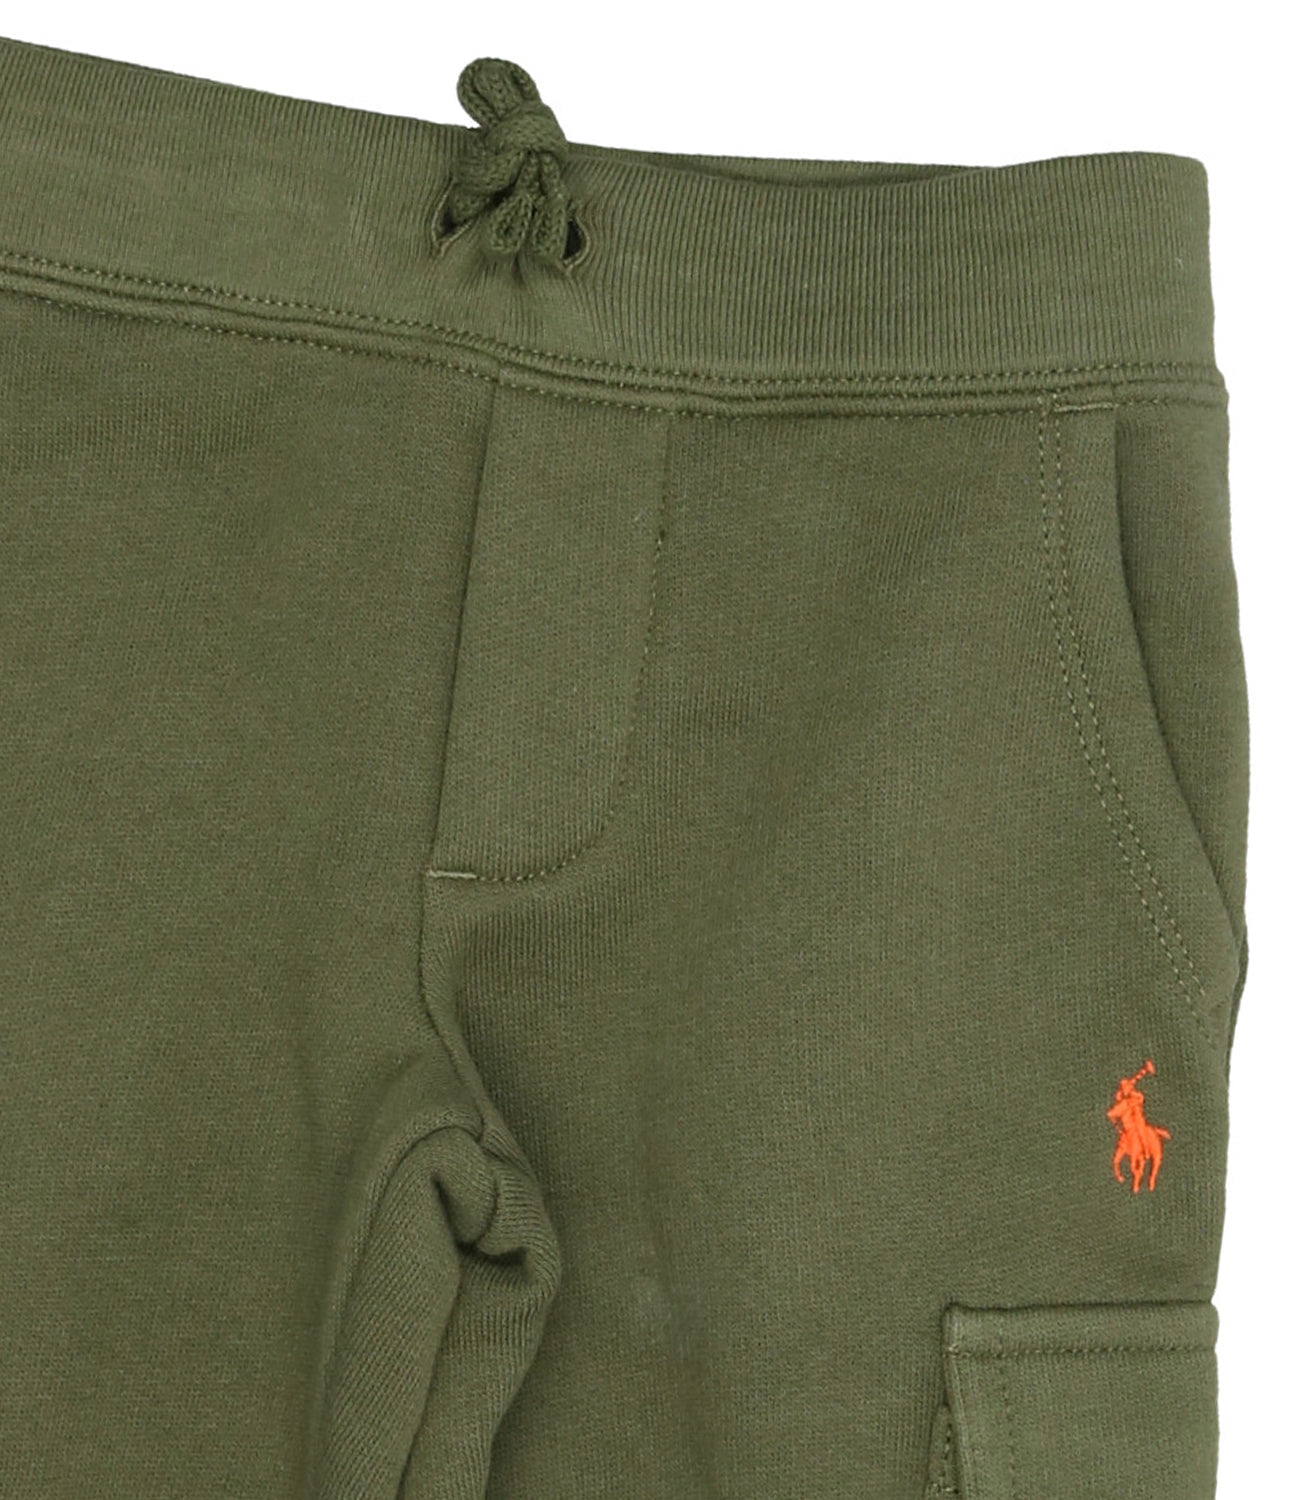 Ralph Lauren Childrenswear | Sage Sports Pants